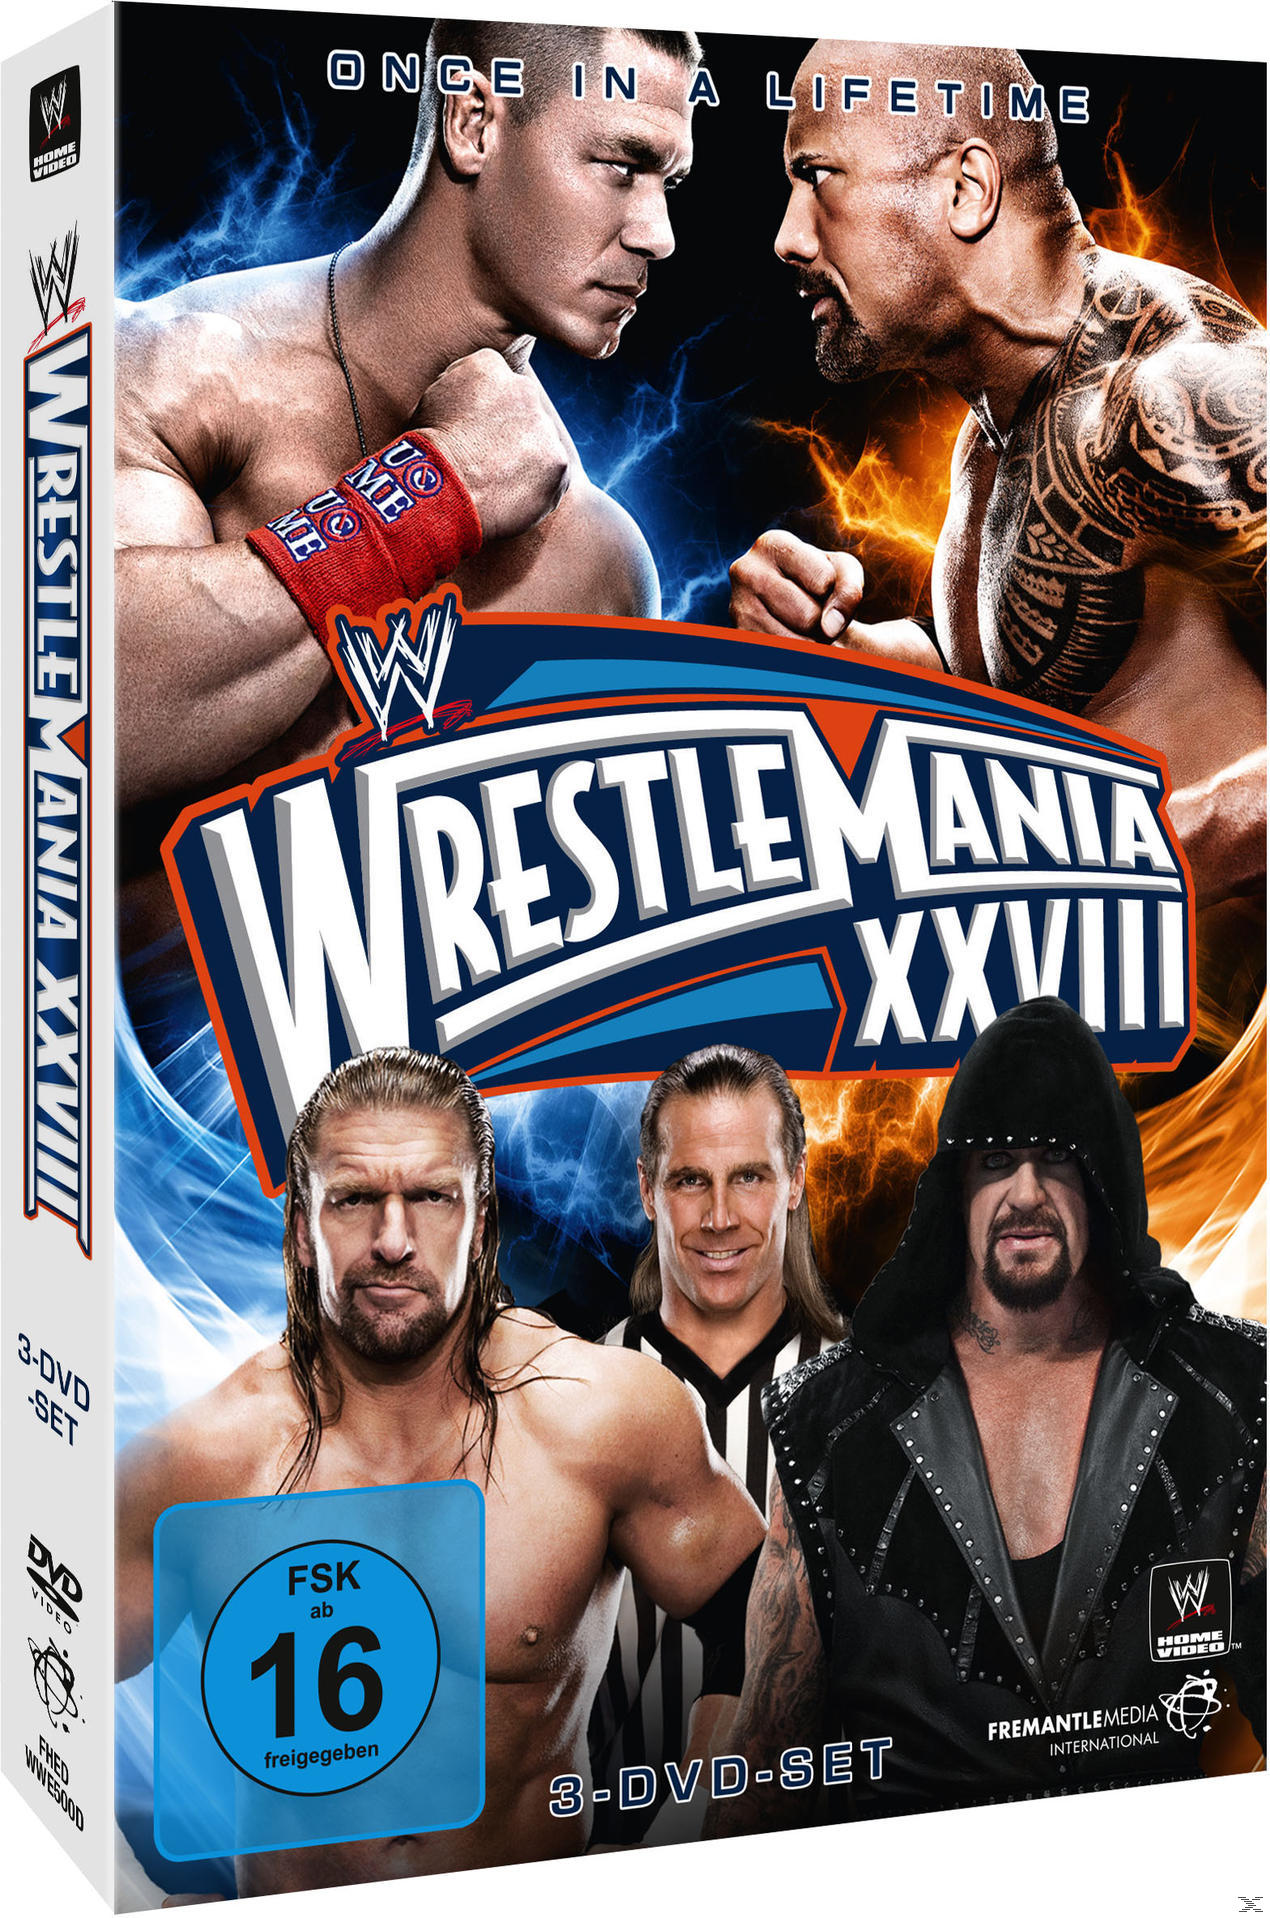 Wrestlemania 28 DVD